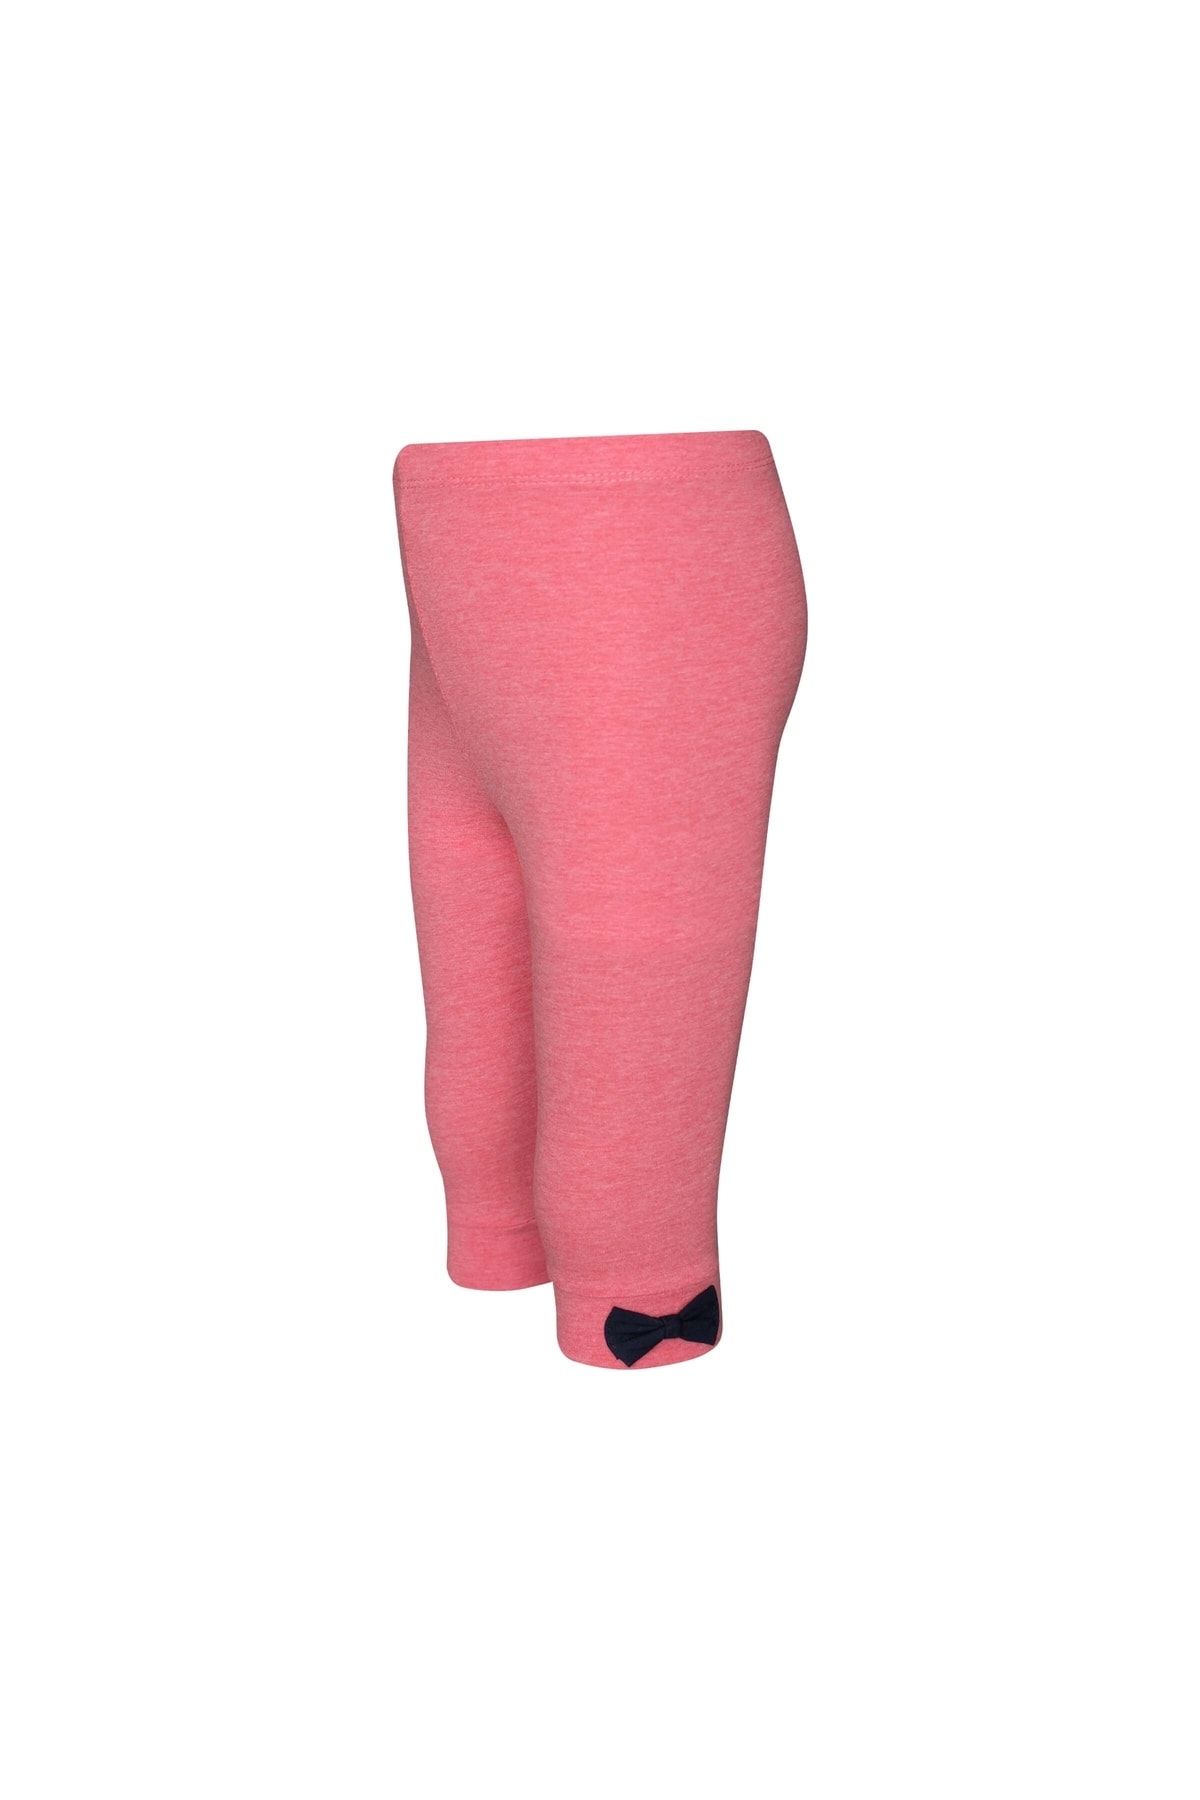 Rainbow Striped Capri Leggings Women, Knee Length Cropped Yoga Pants P –  Starcove Fashion